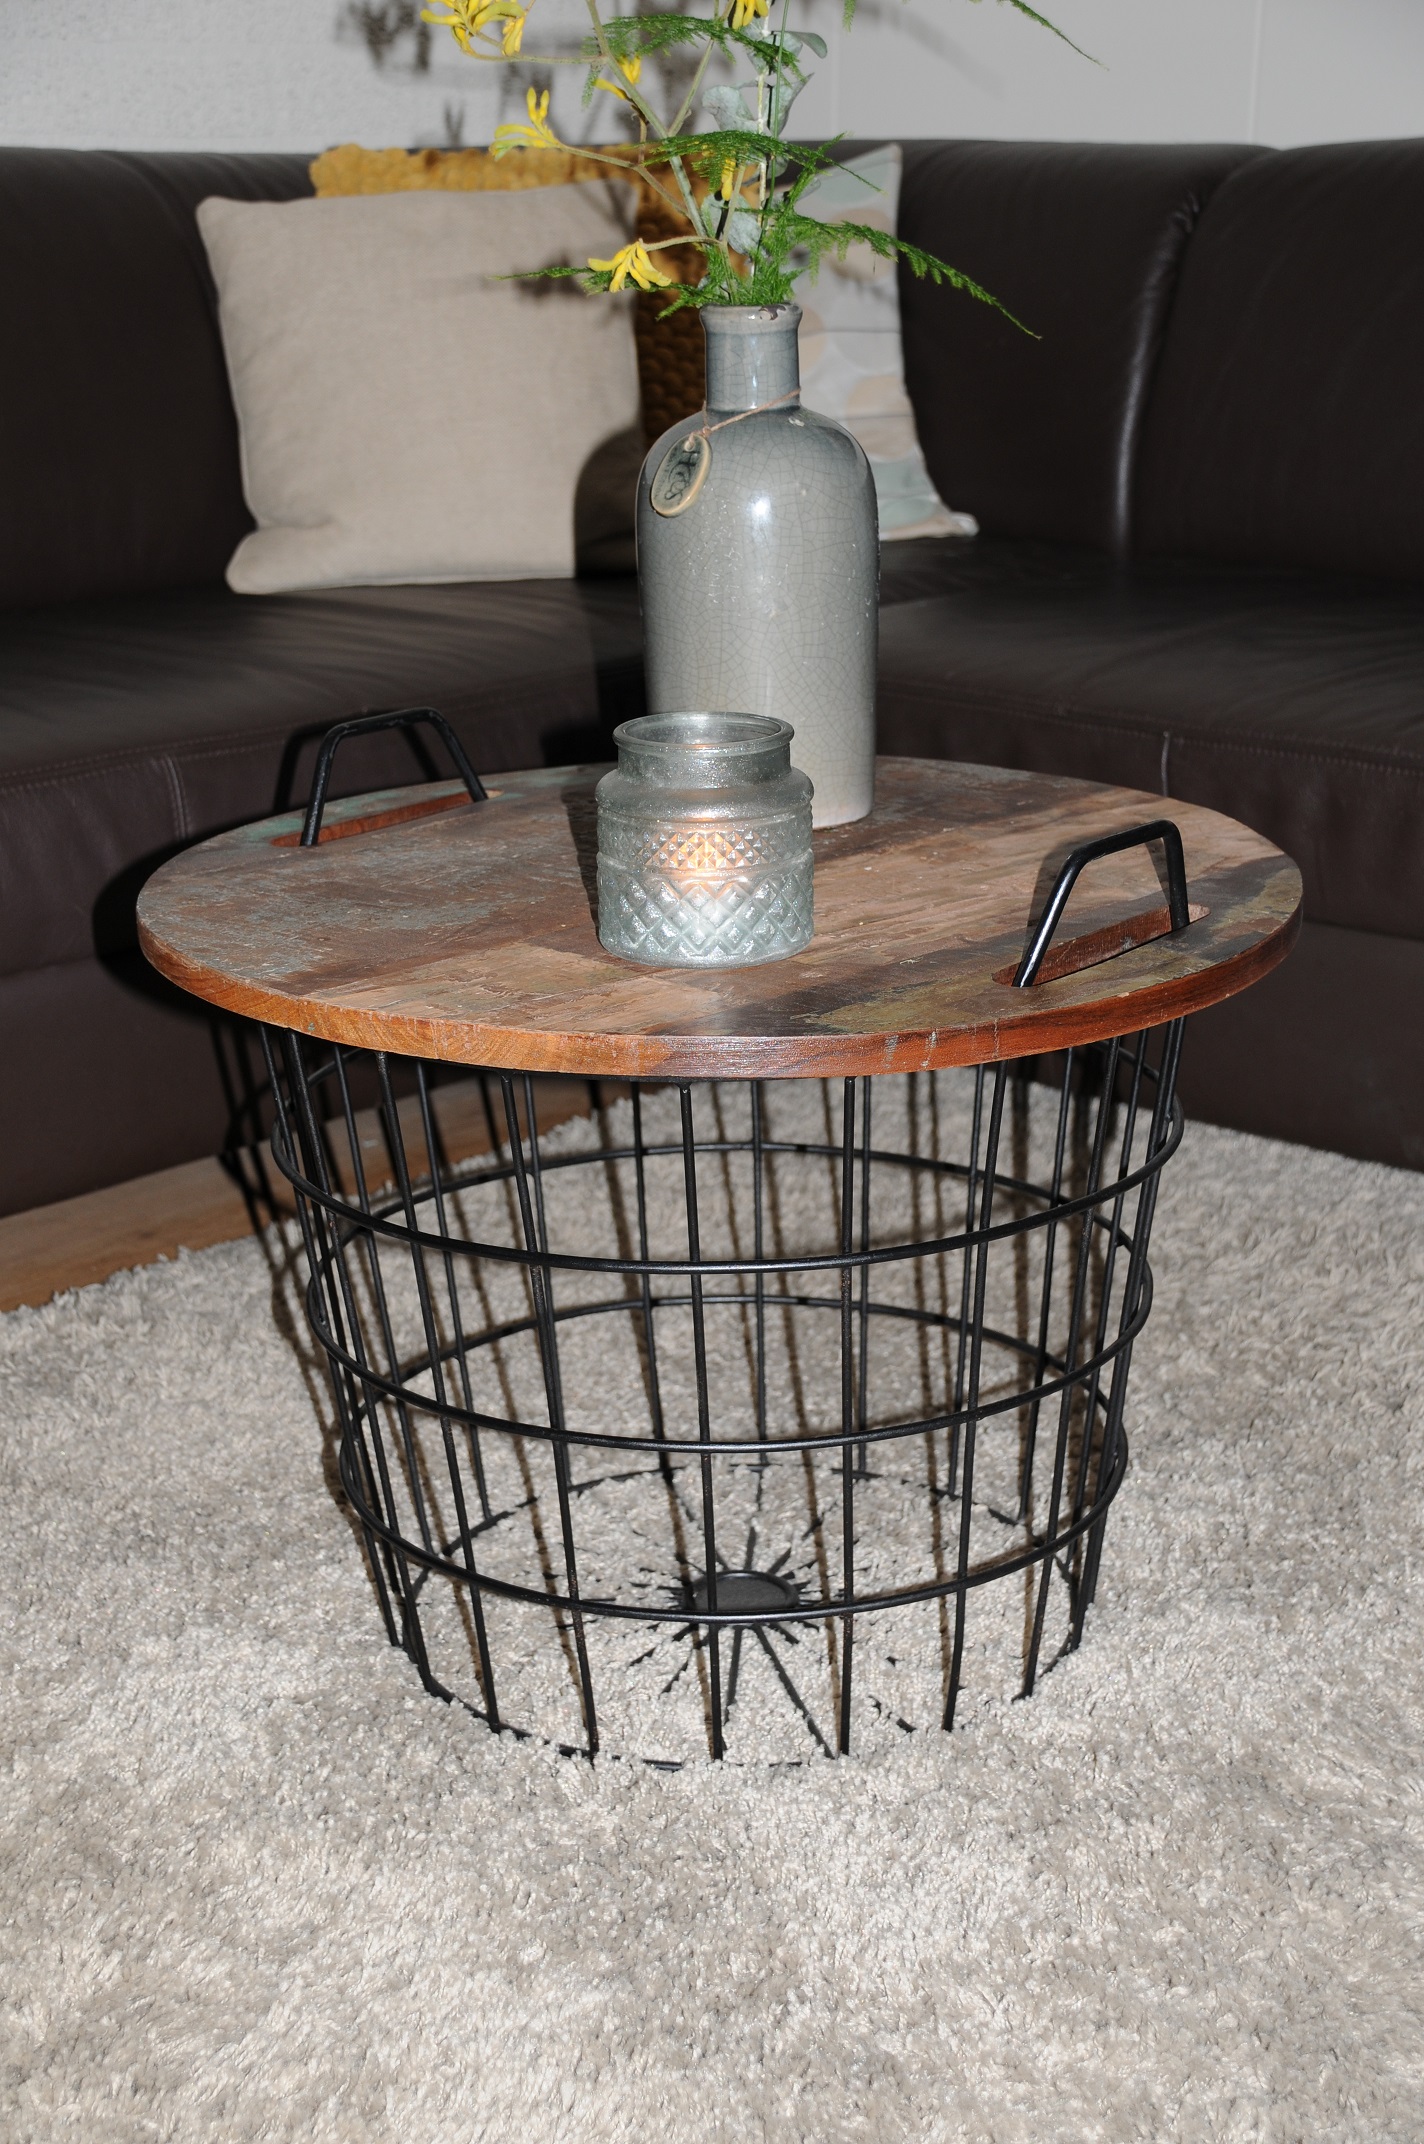 Table basket By-boo-metal-colonial hardwood tabletop, very trendy!!